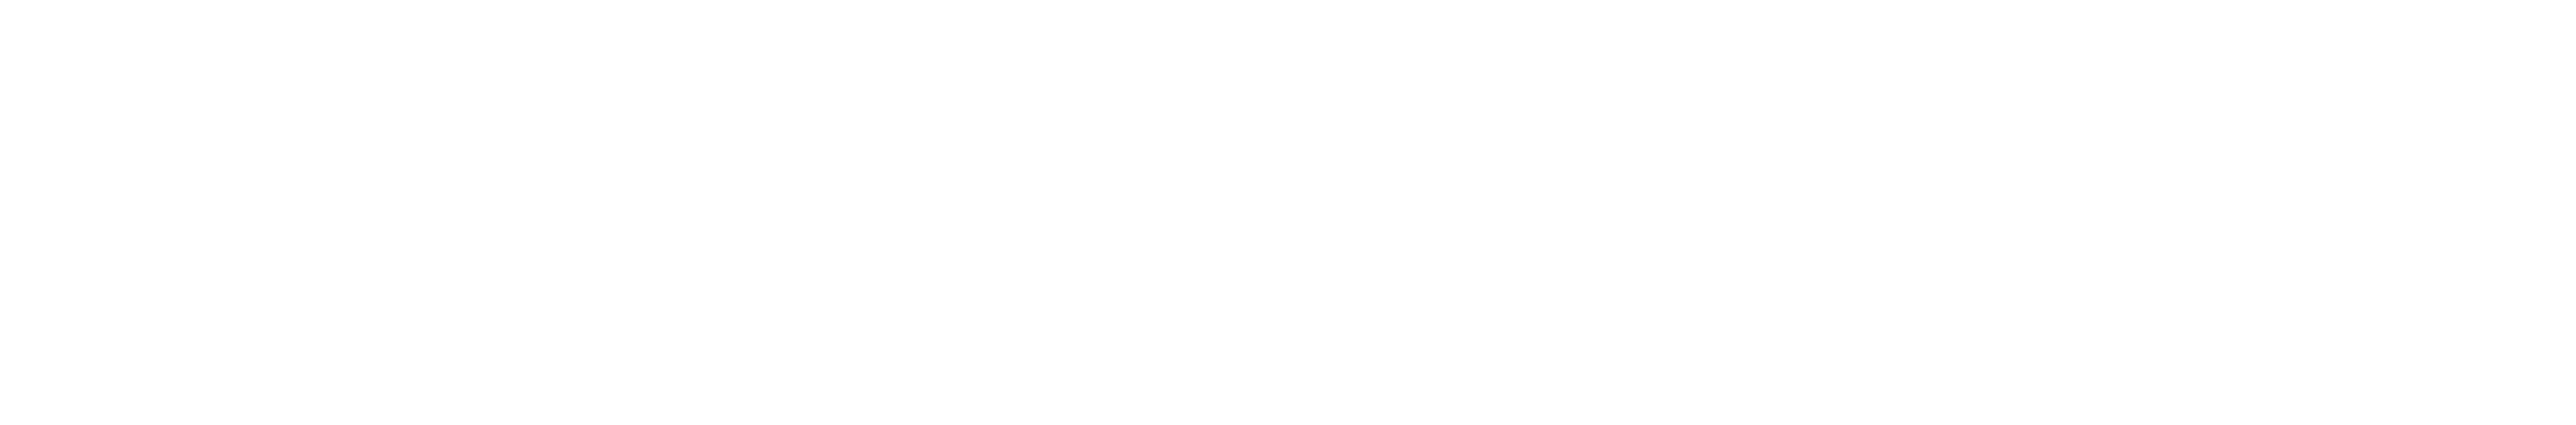 ArganoConnect logo